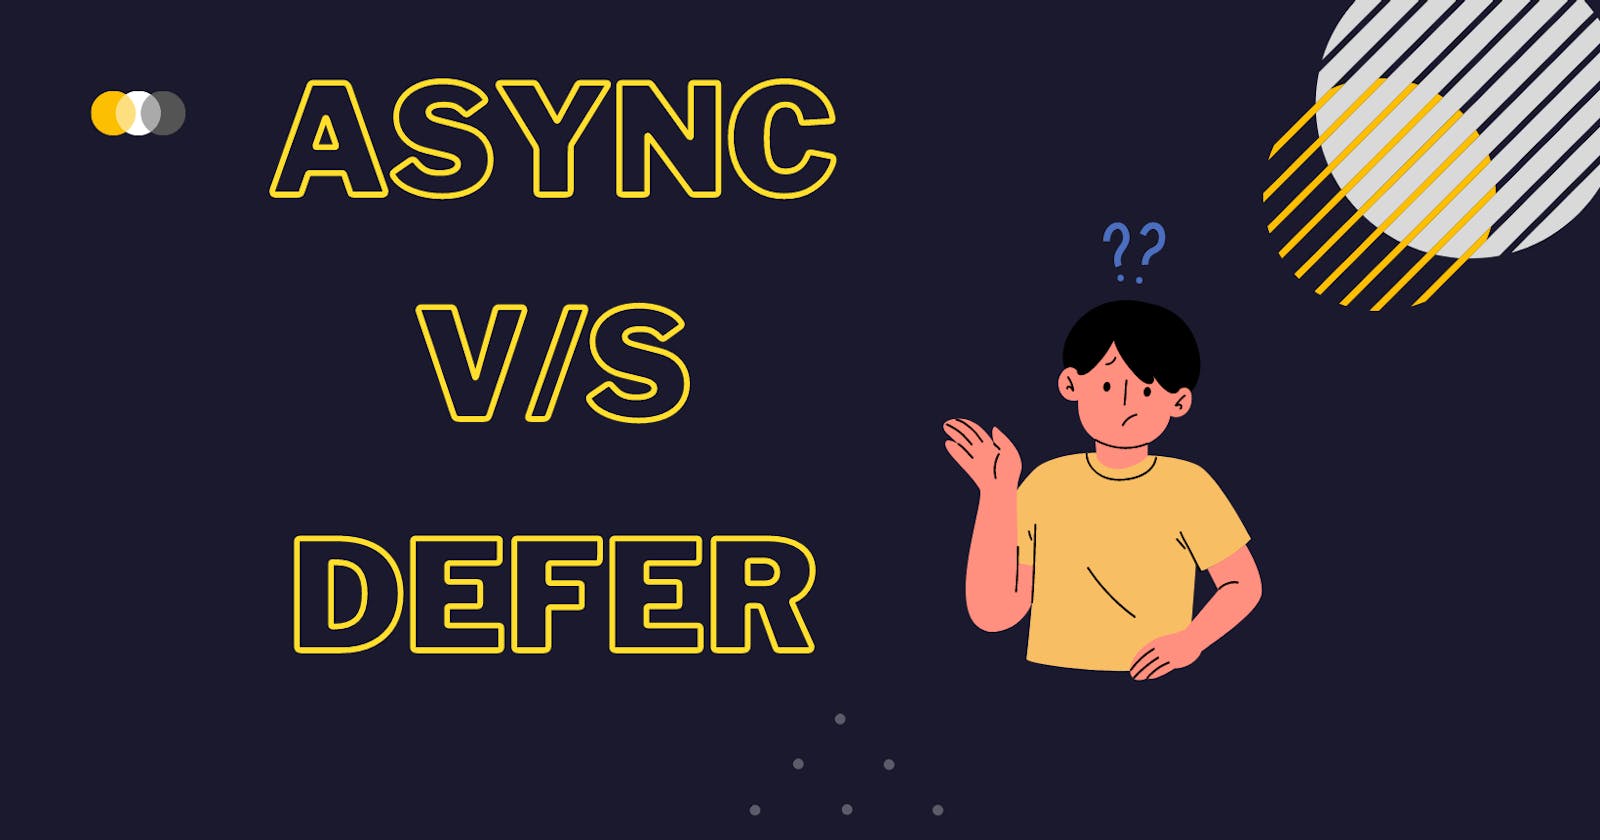 async vs defer attributes in Javascript